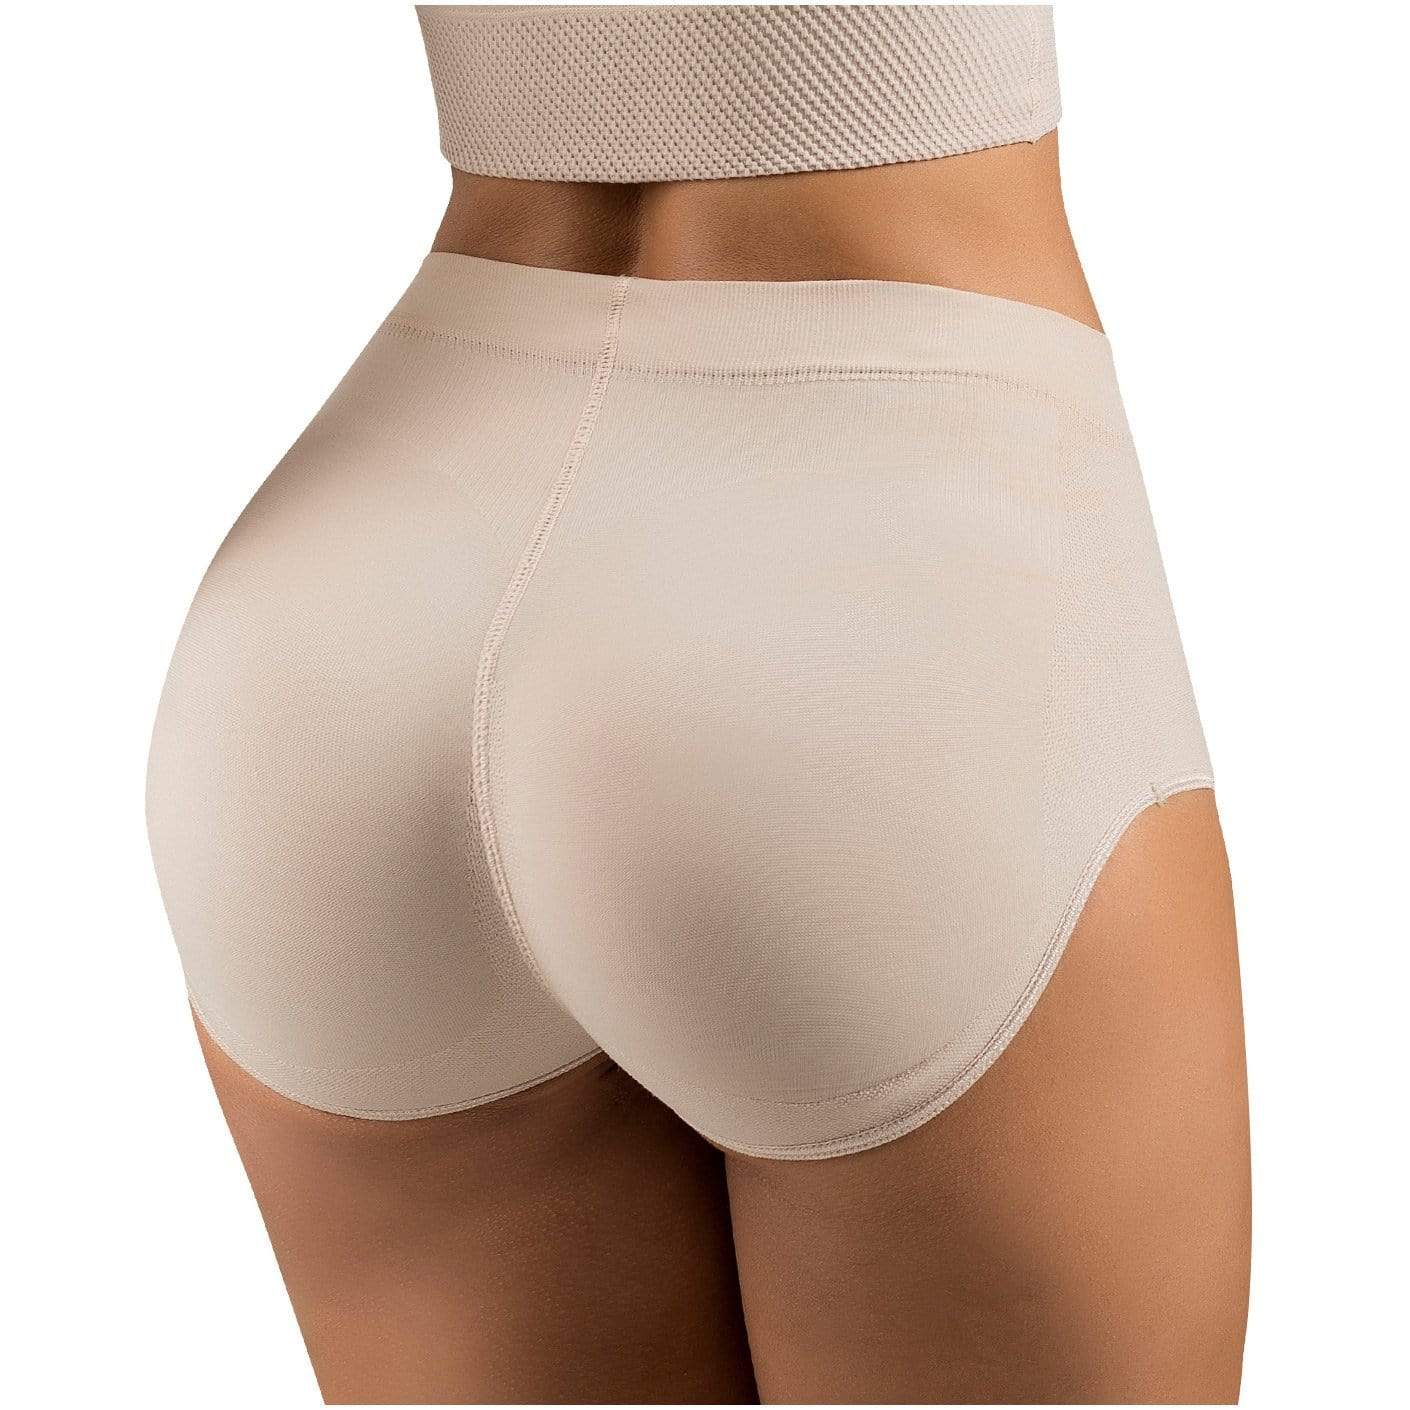 Buy LT.Rose Butt Lifting Enhancer Shapewear Panties Calzones